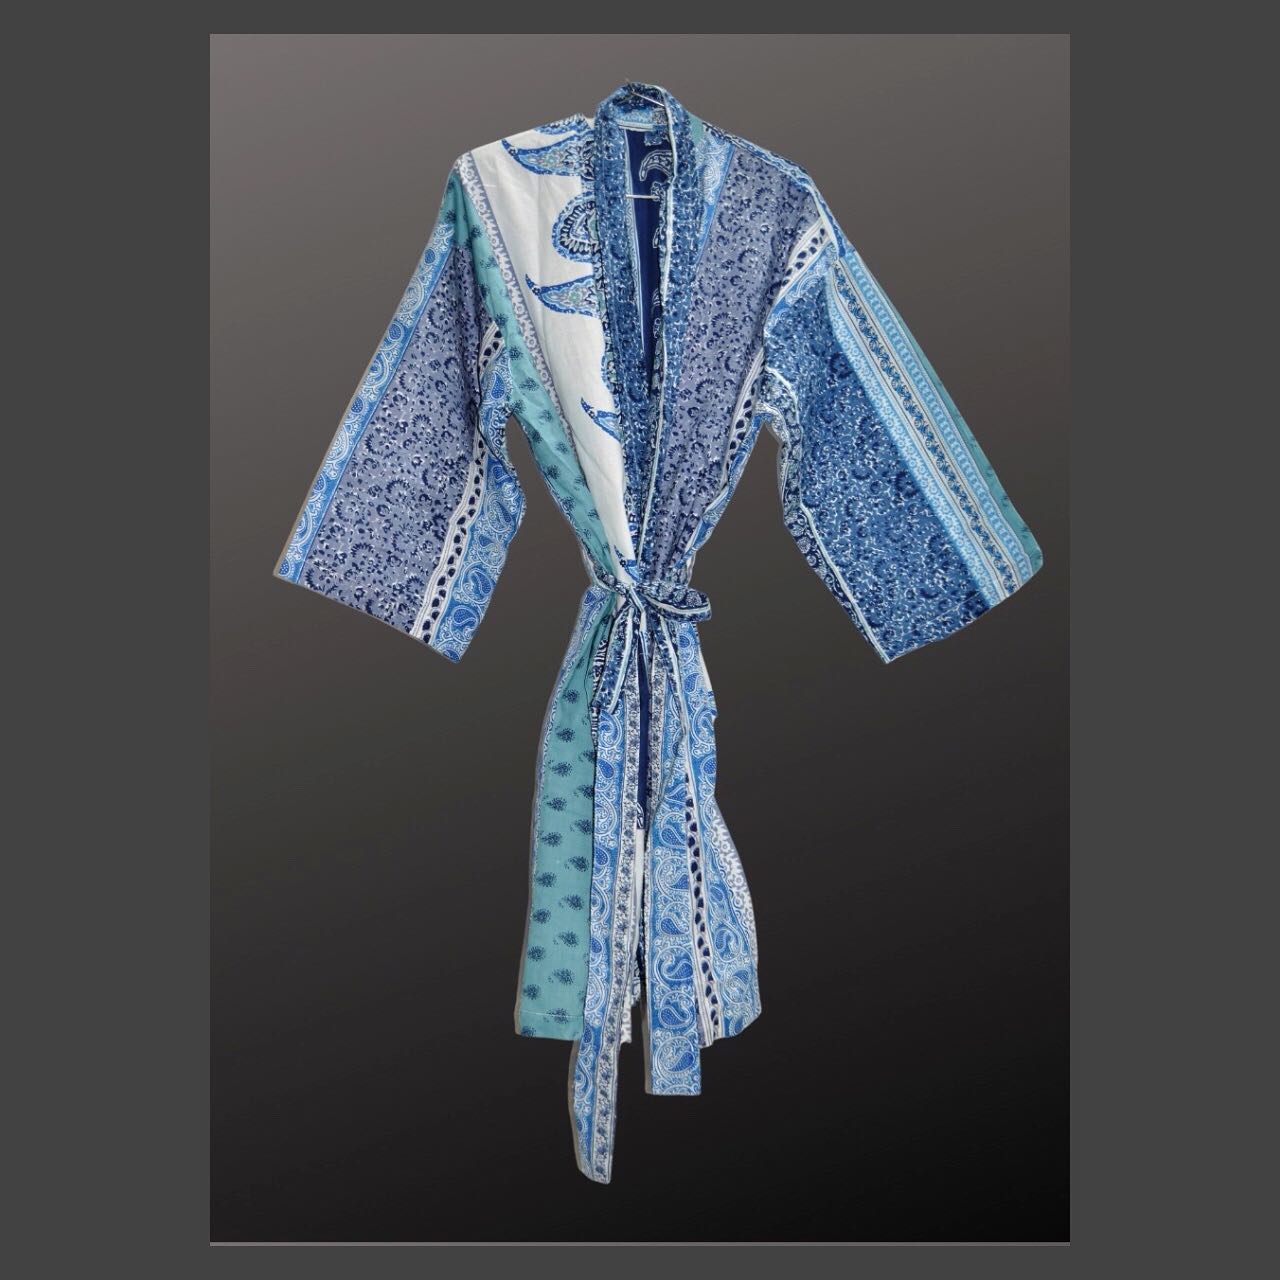 Kimono Bath Robes/ Night Suit - Border Blue - The Teal Thread